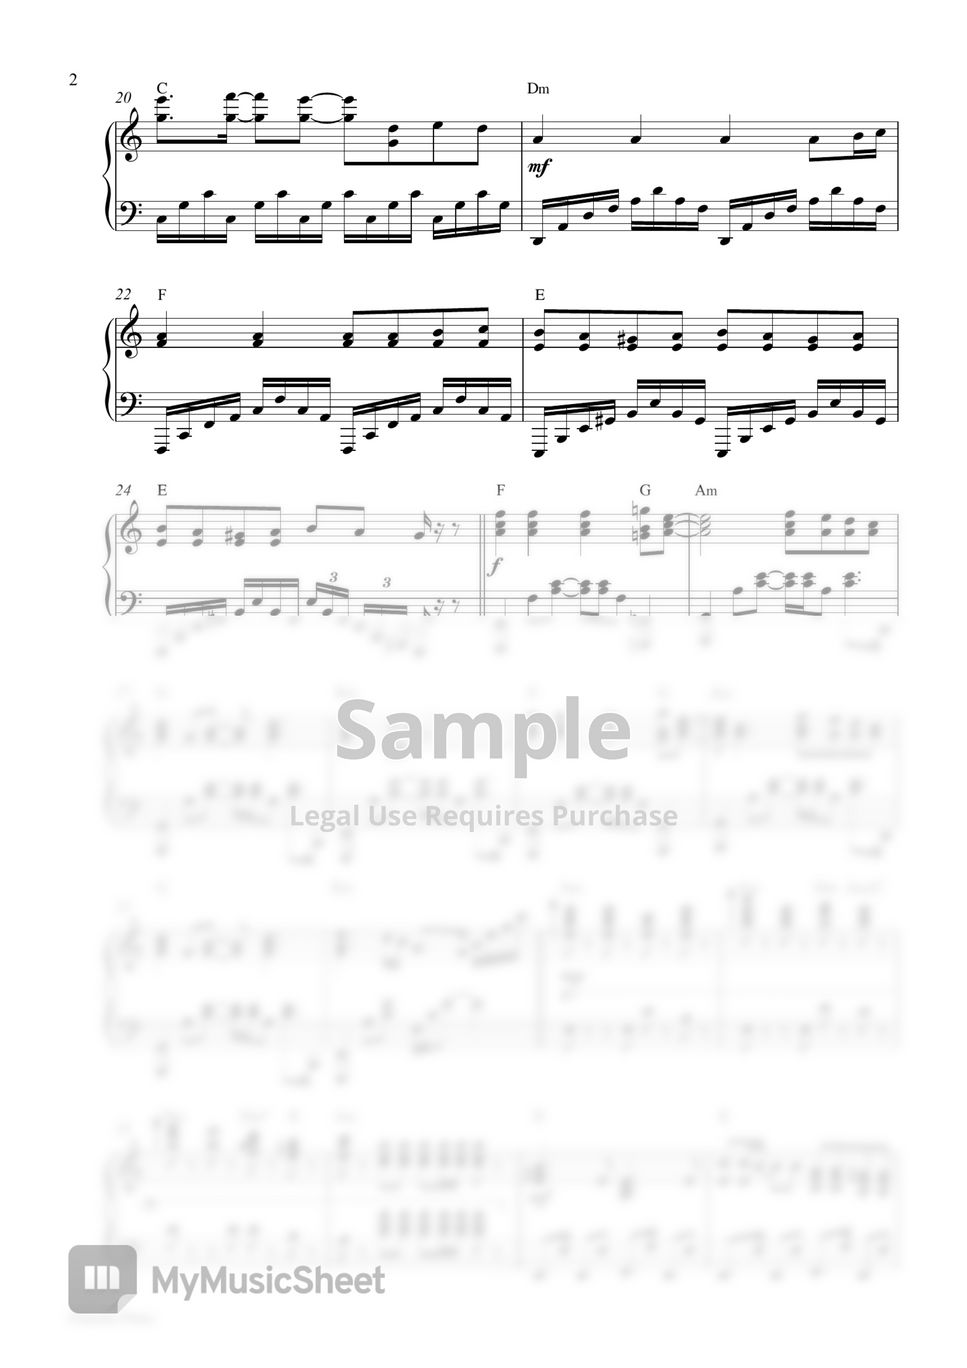 Lady Gaga - Bloody Mary (Piano Sheet) by Pianella Piano